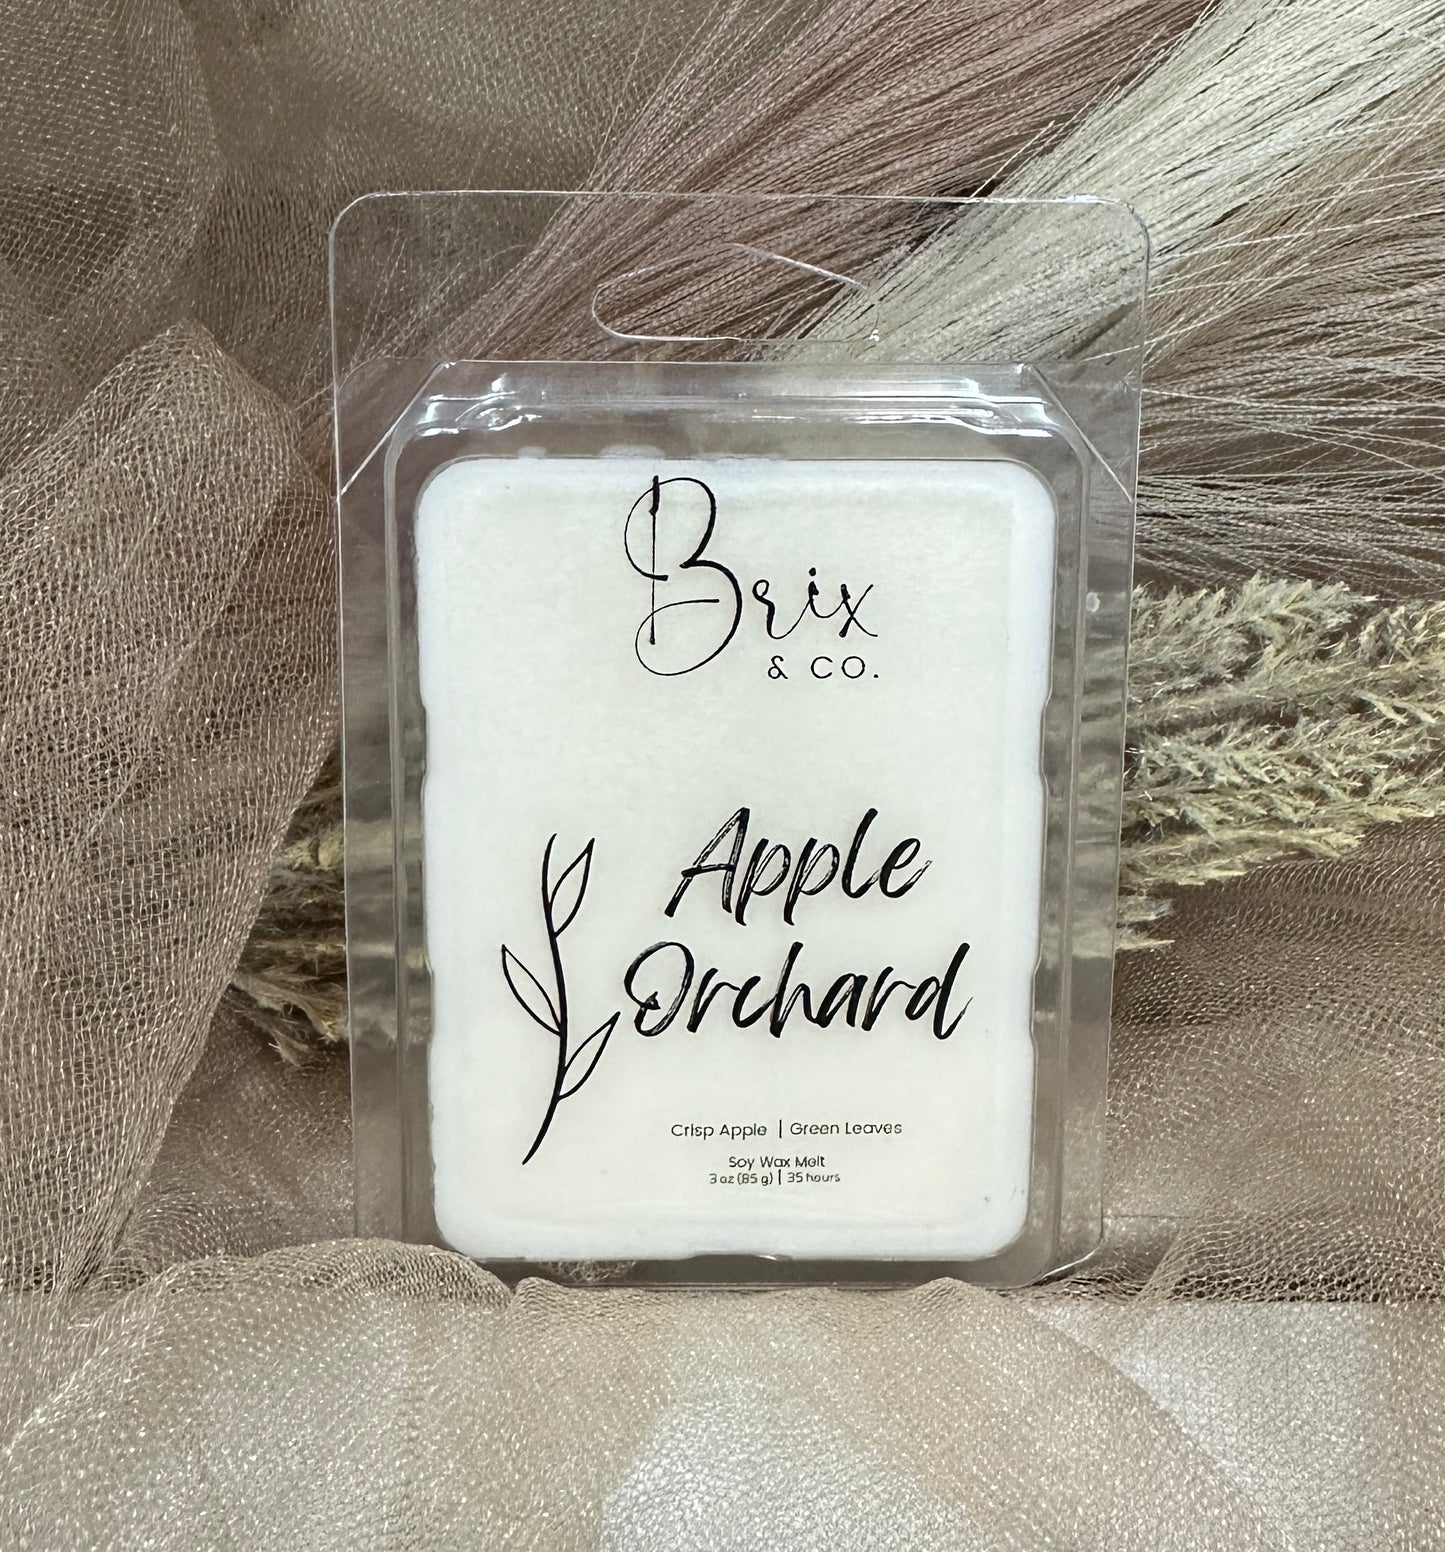 Apple Orchard Soy Wax Melt